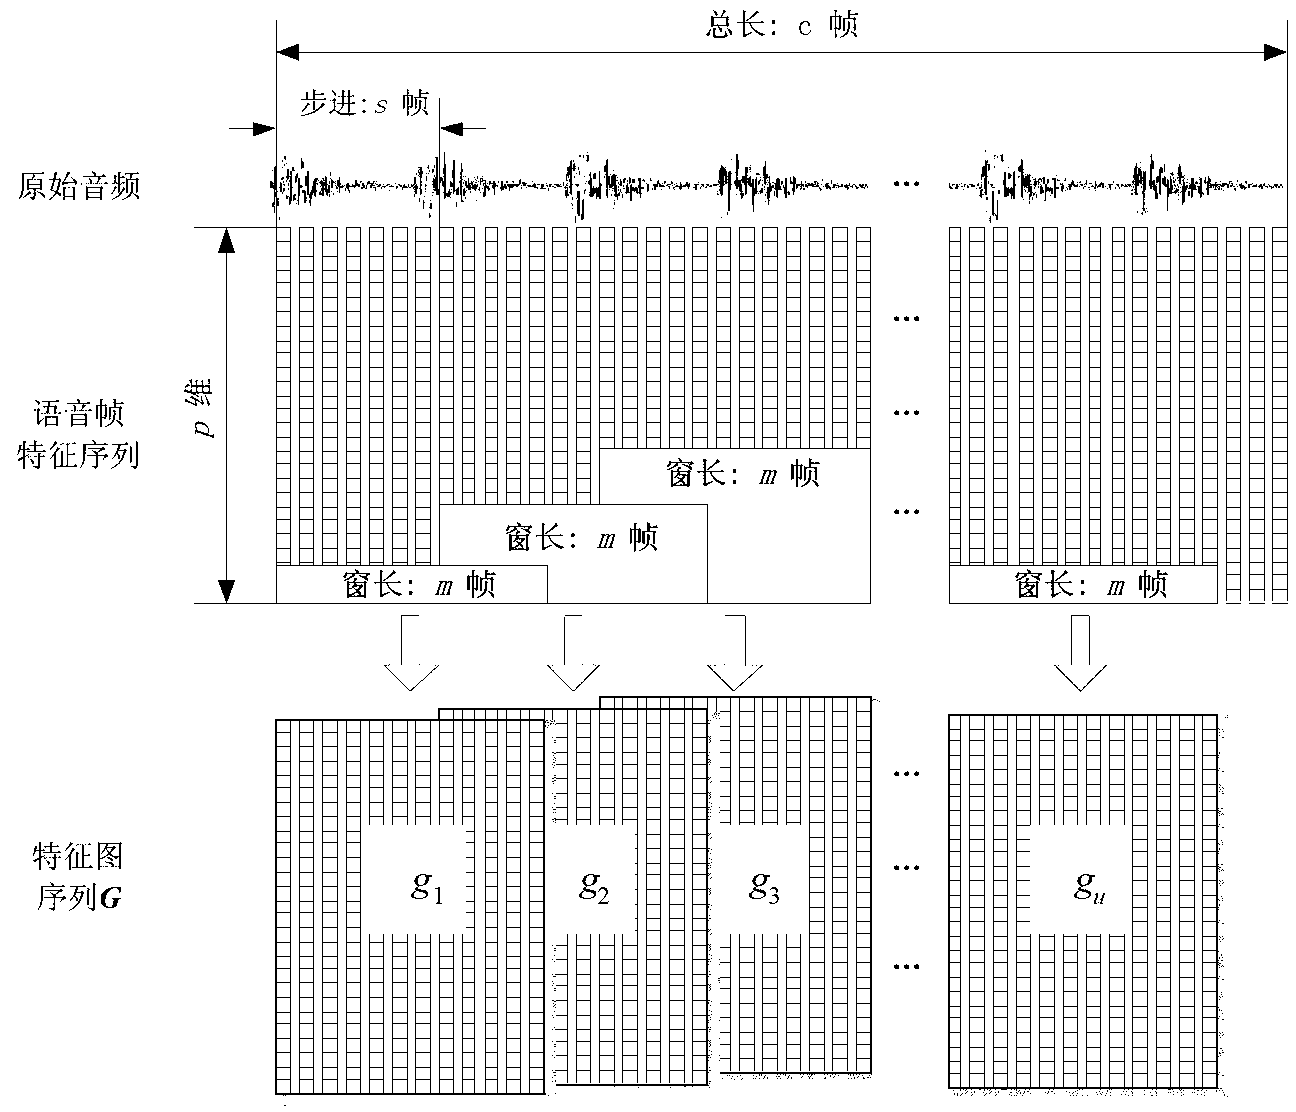 Large-scaled speaker identification method